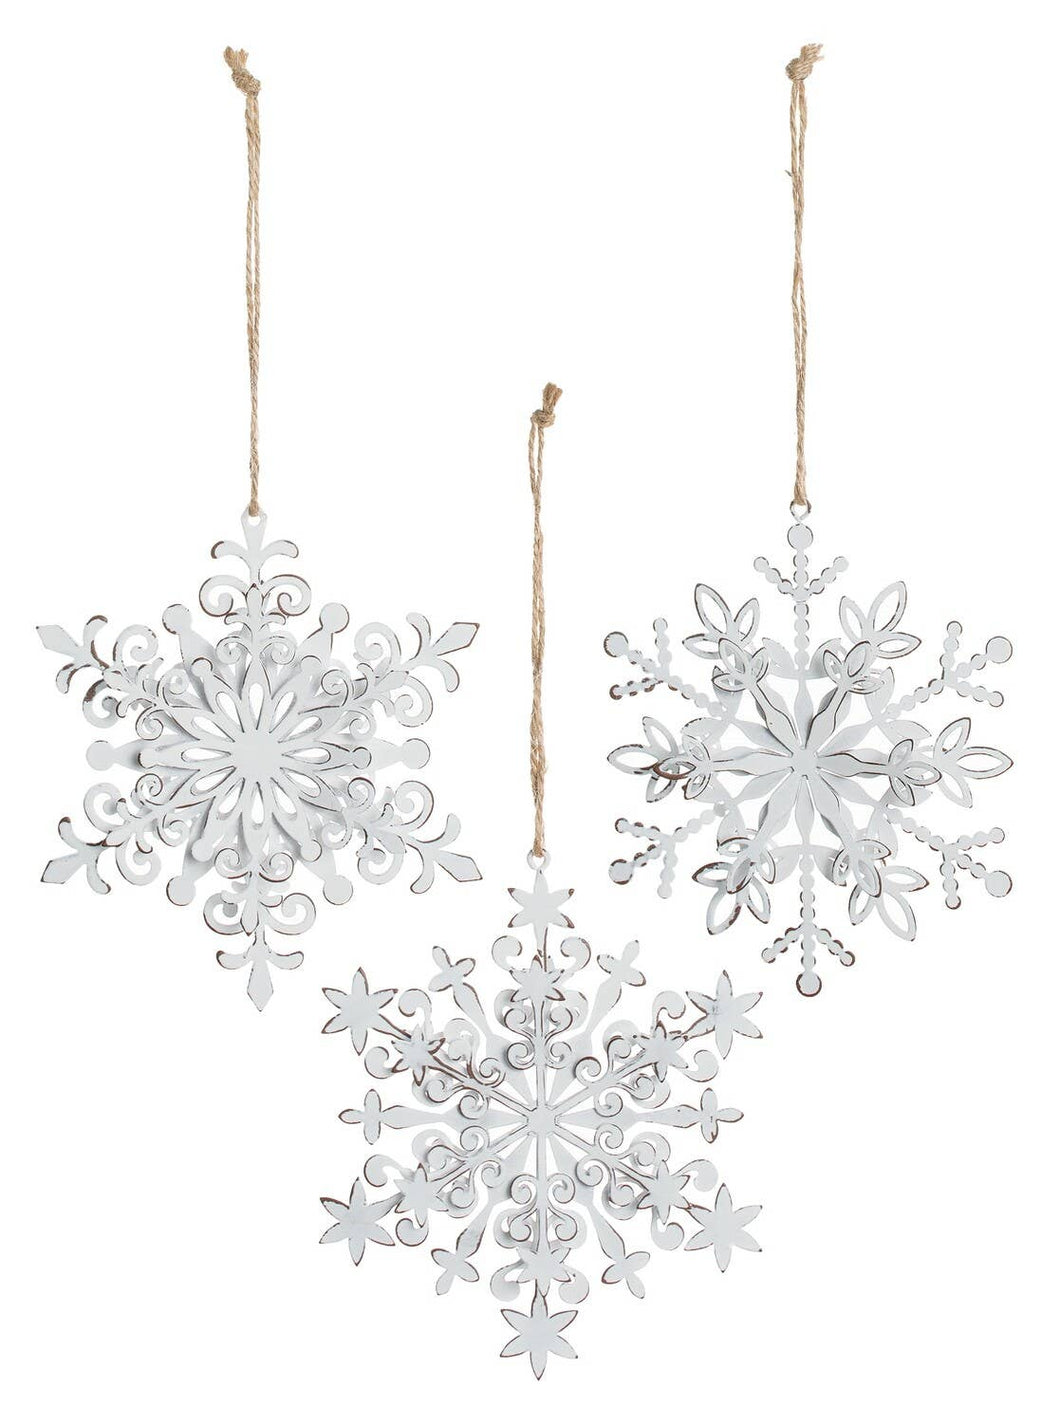 Glittered Metal Snowflake Ornament